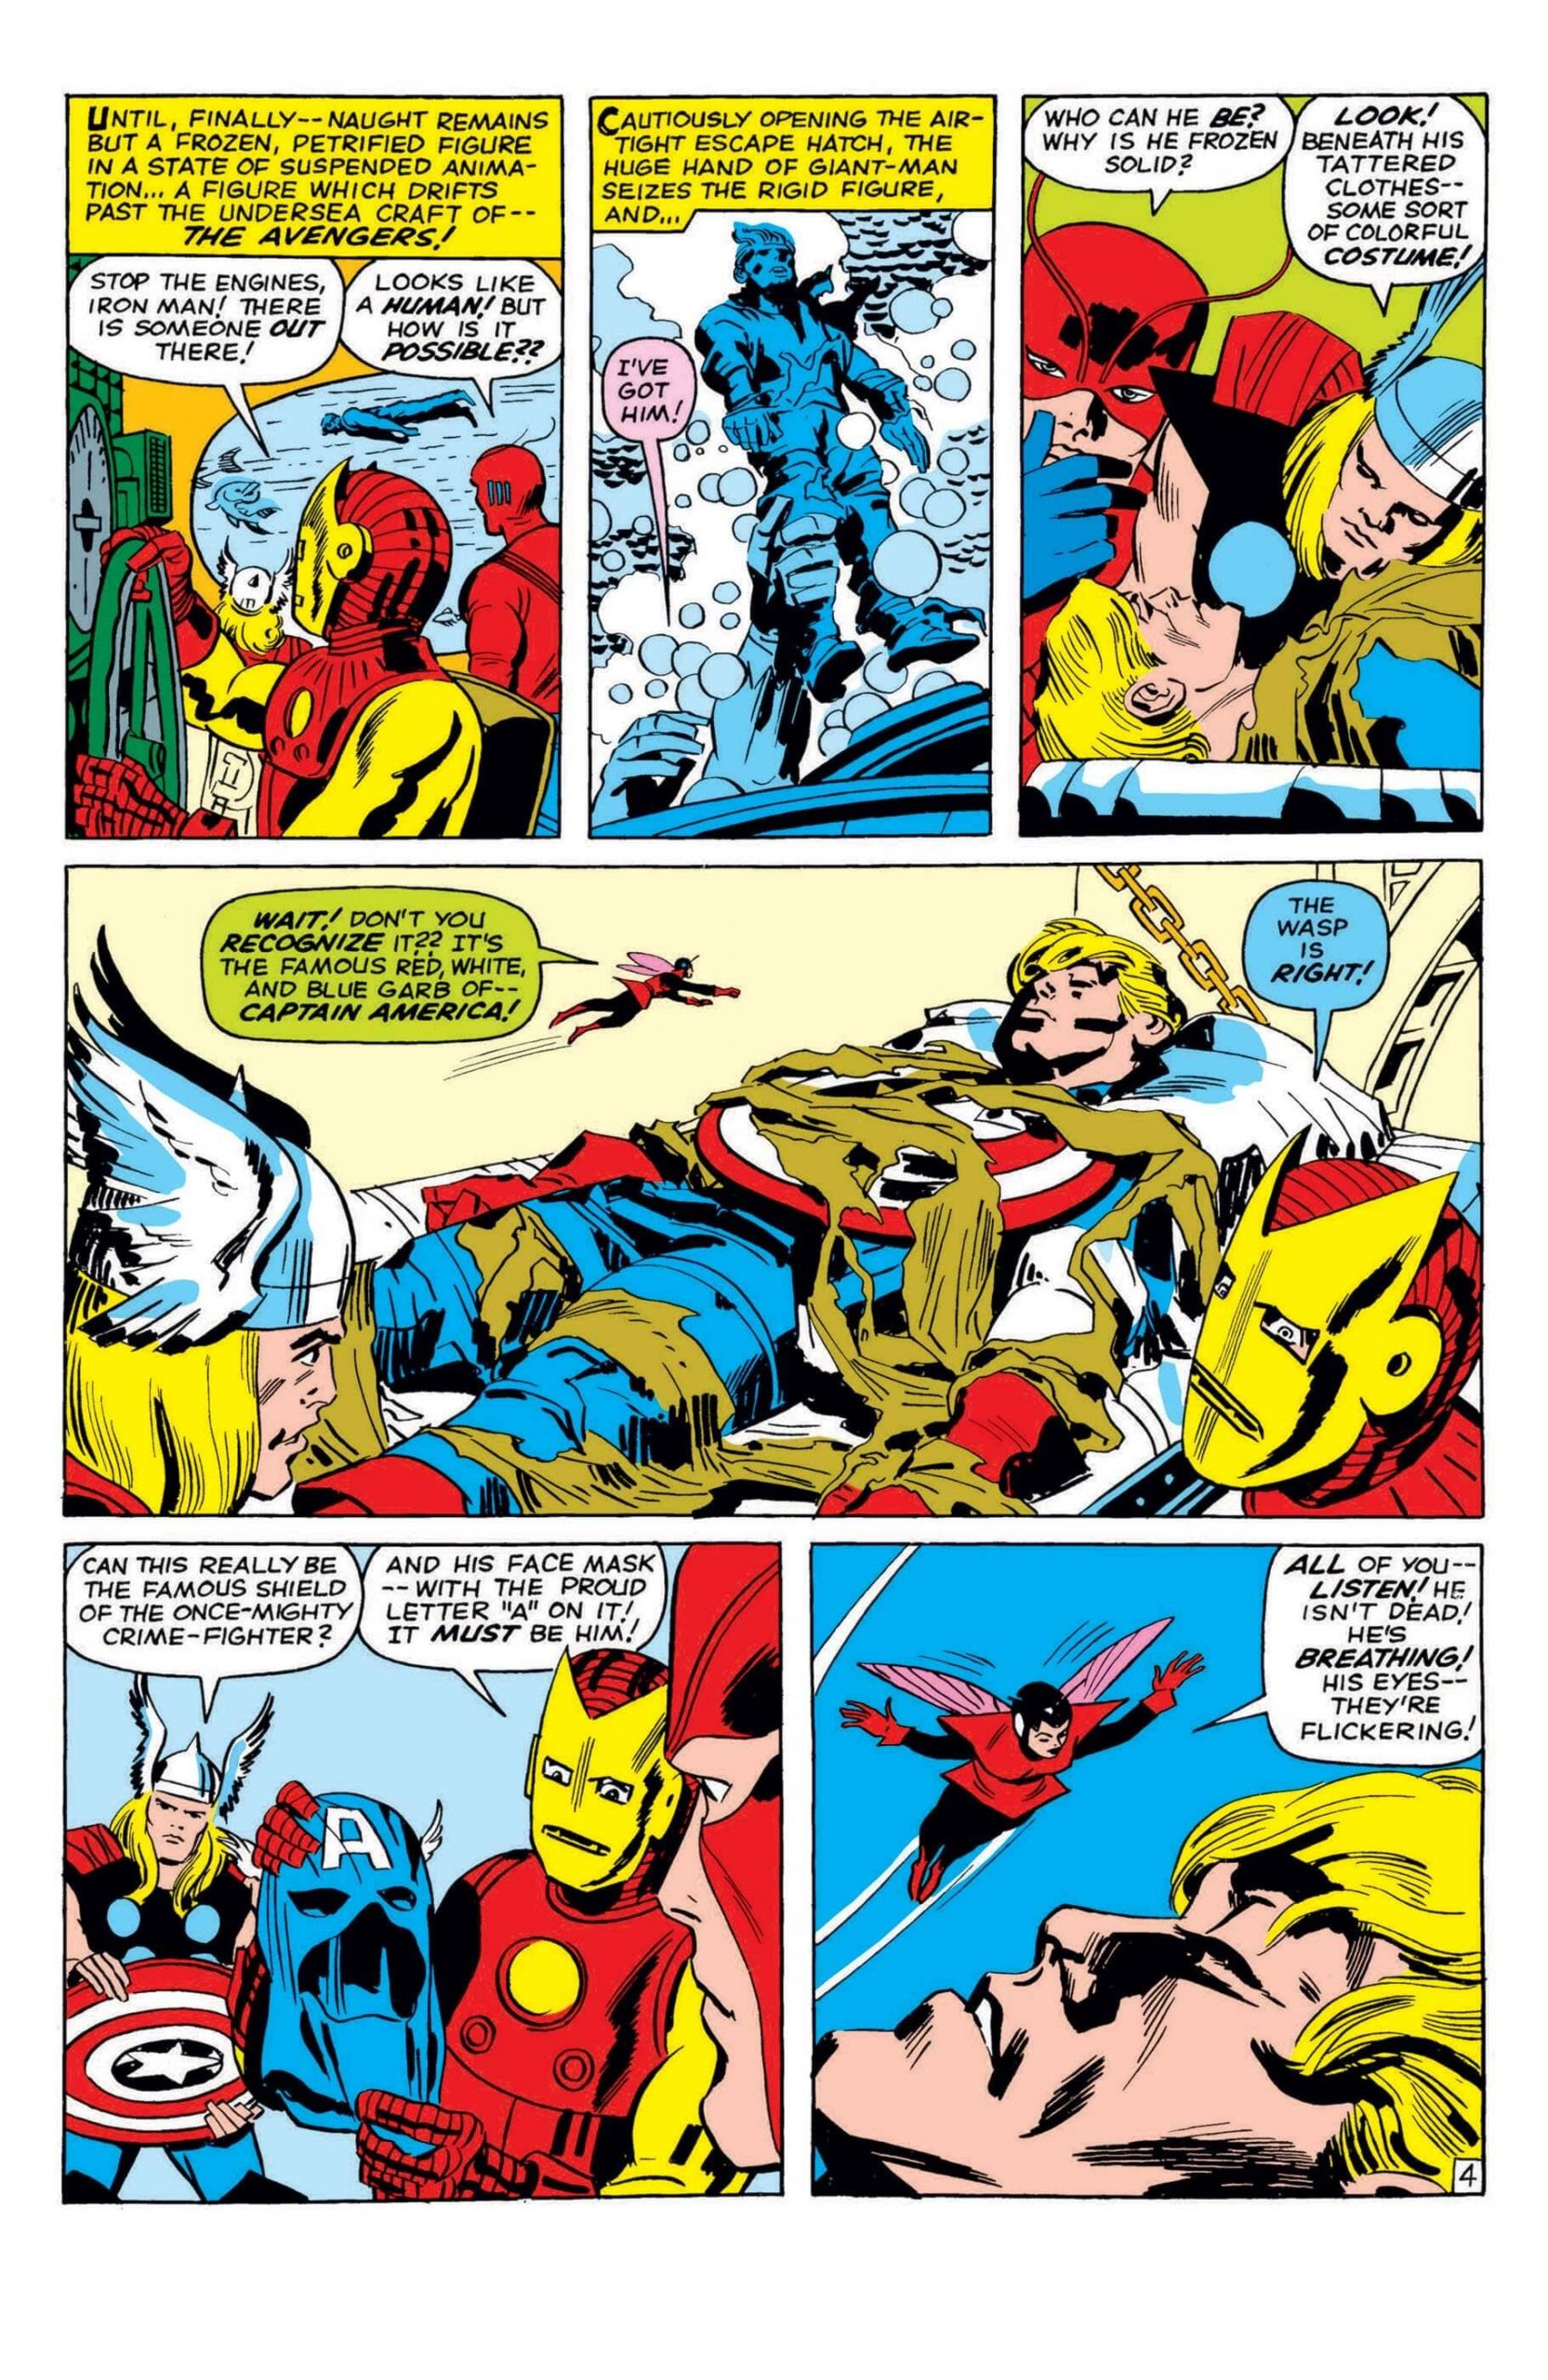 Avengers #4 Interior Panels